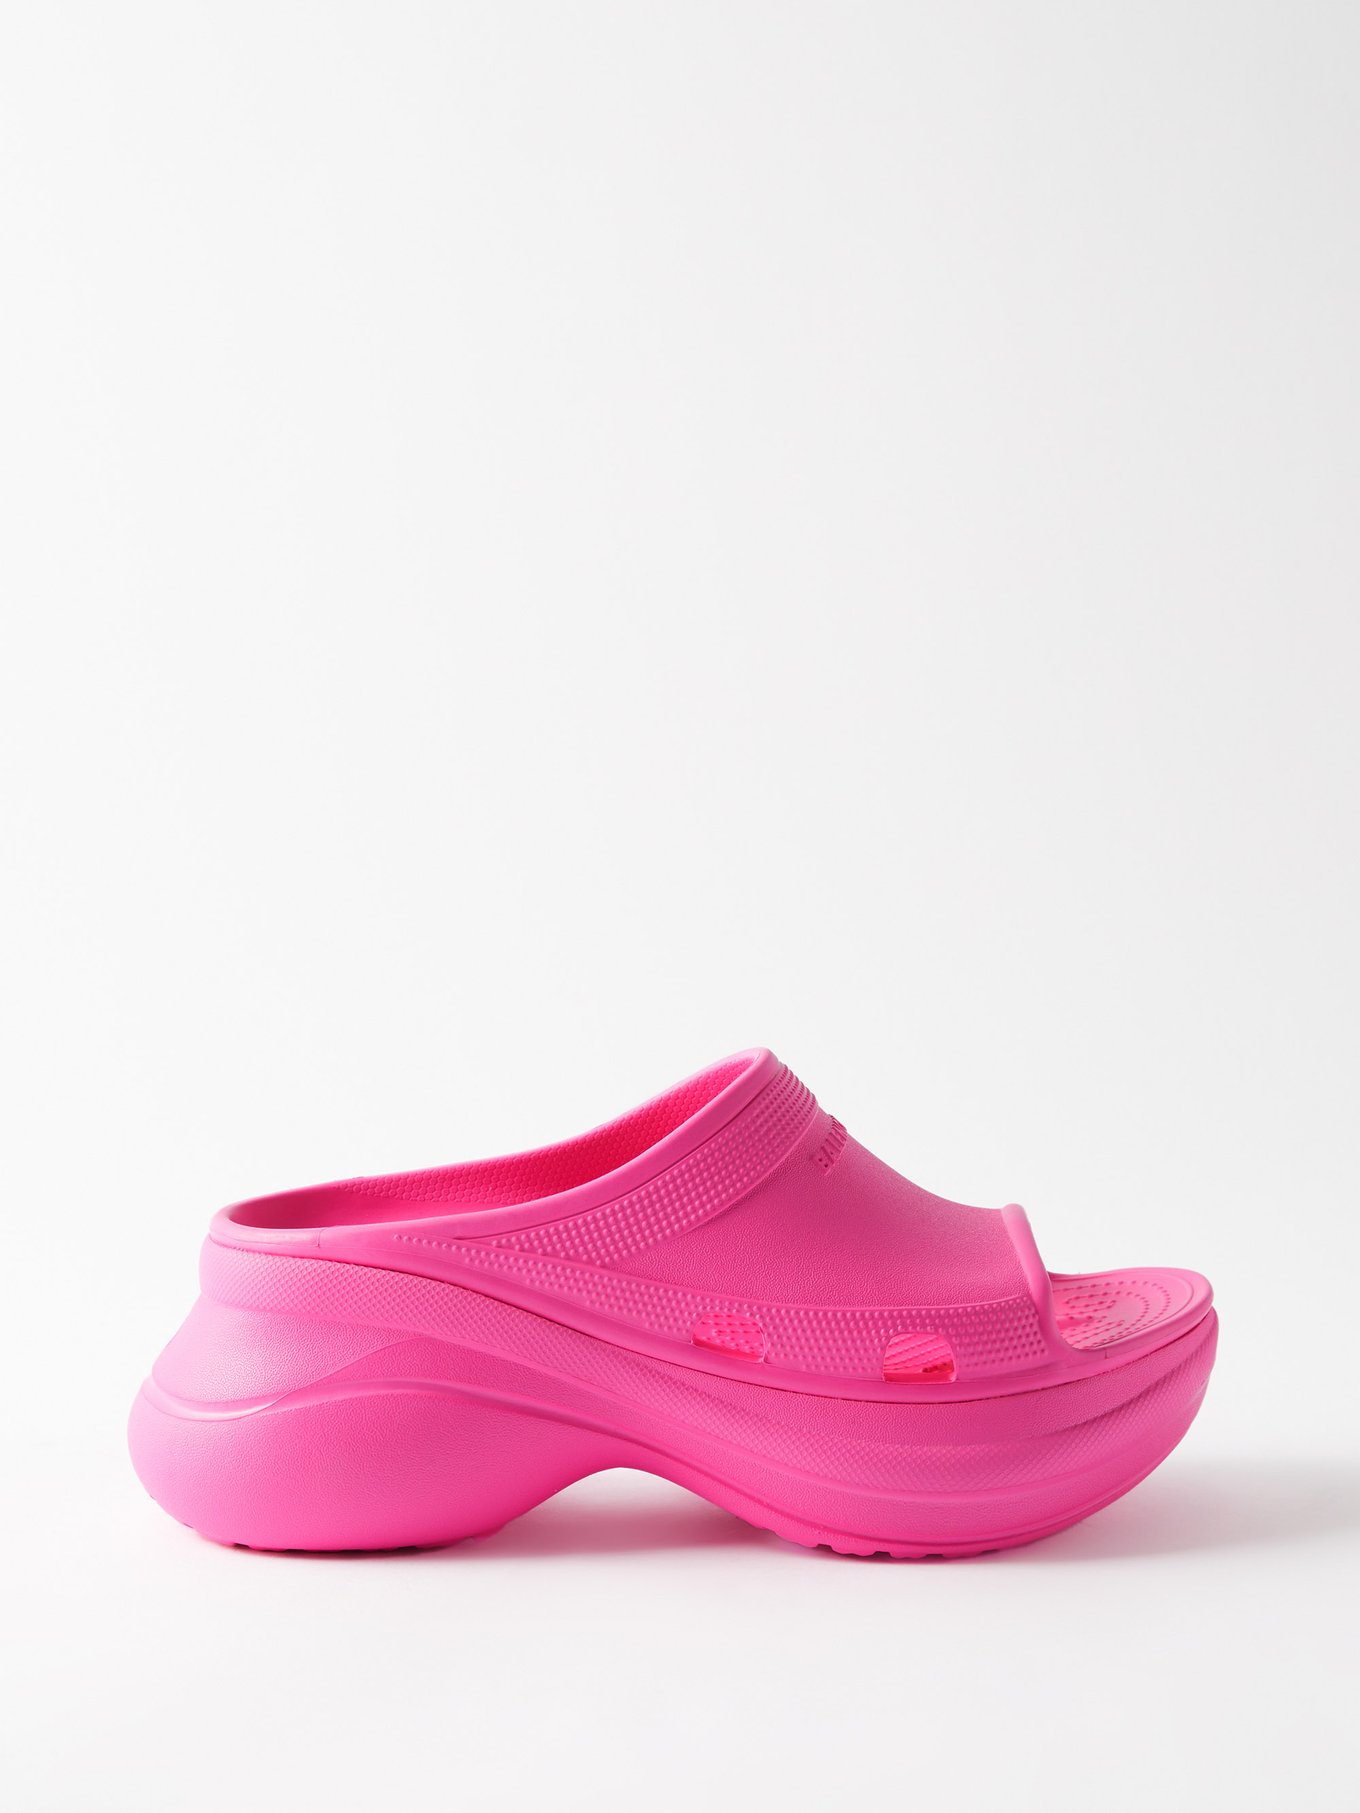 Balenciaga Women's Pool Crocs Slide Sandals